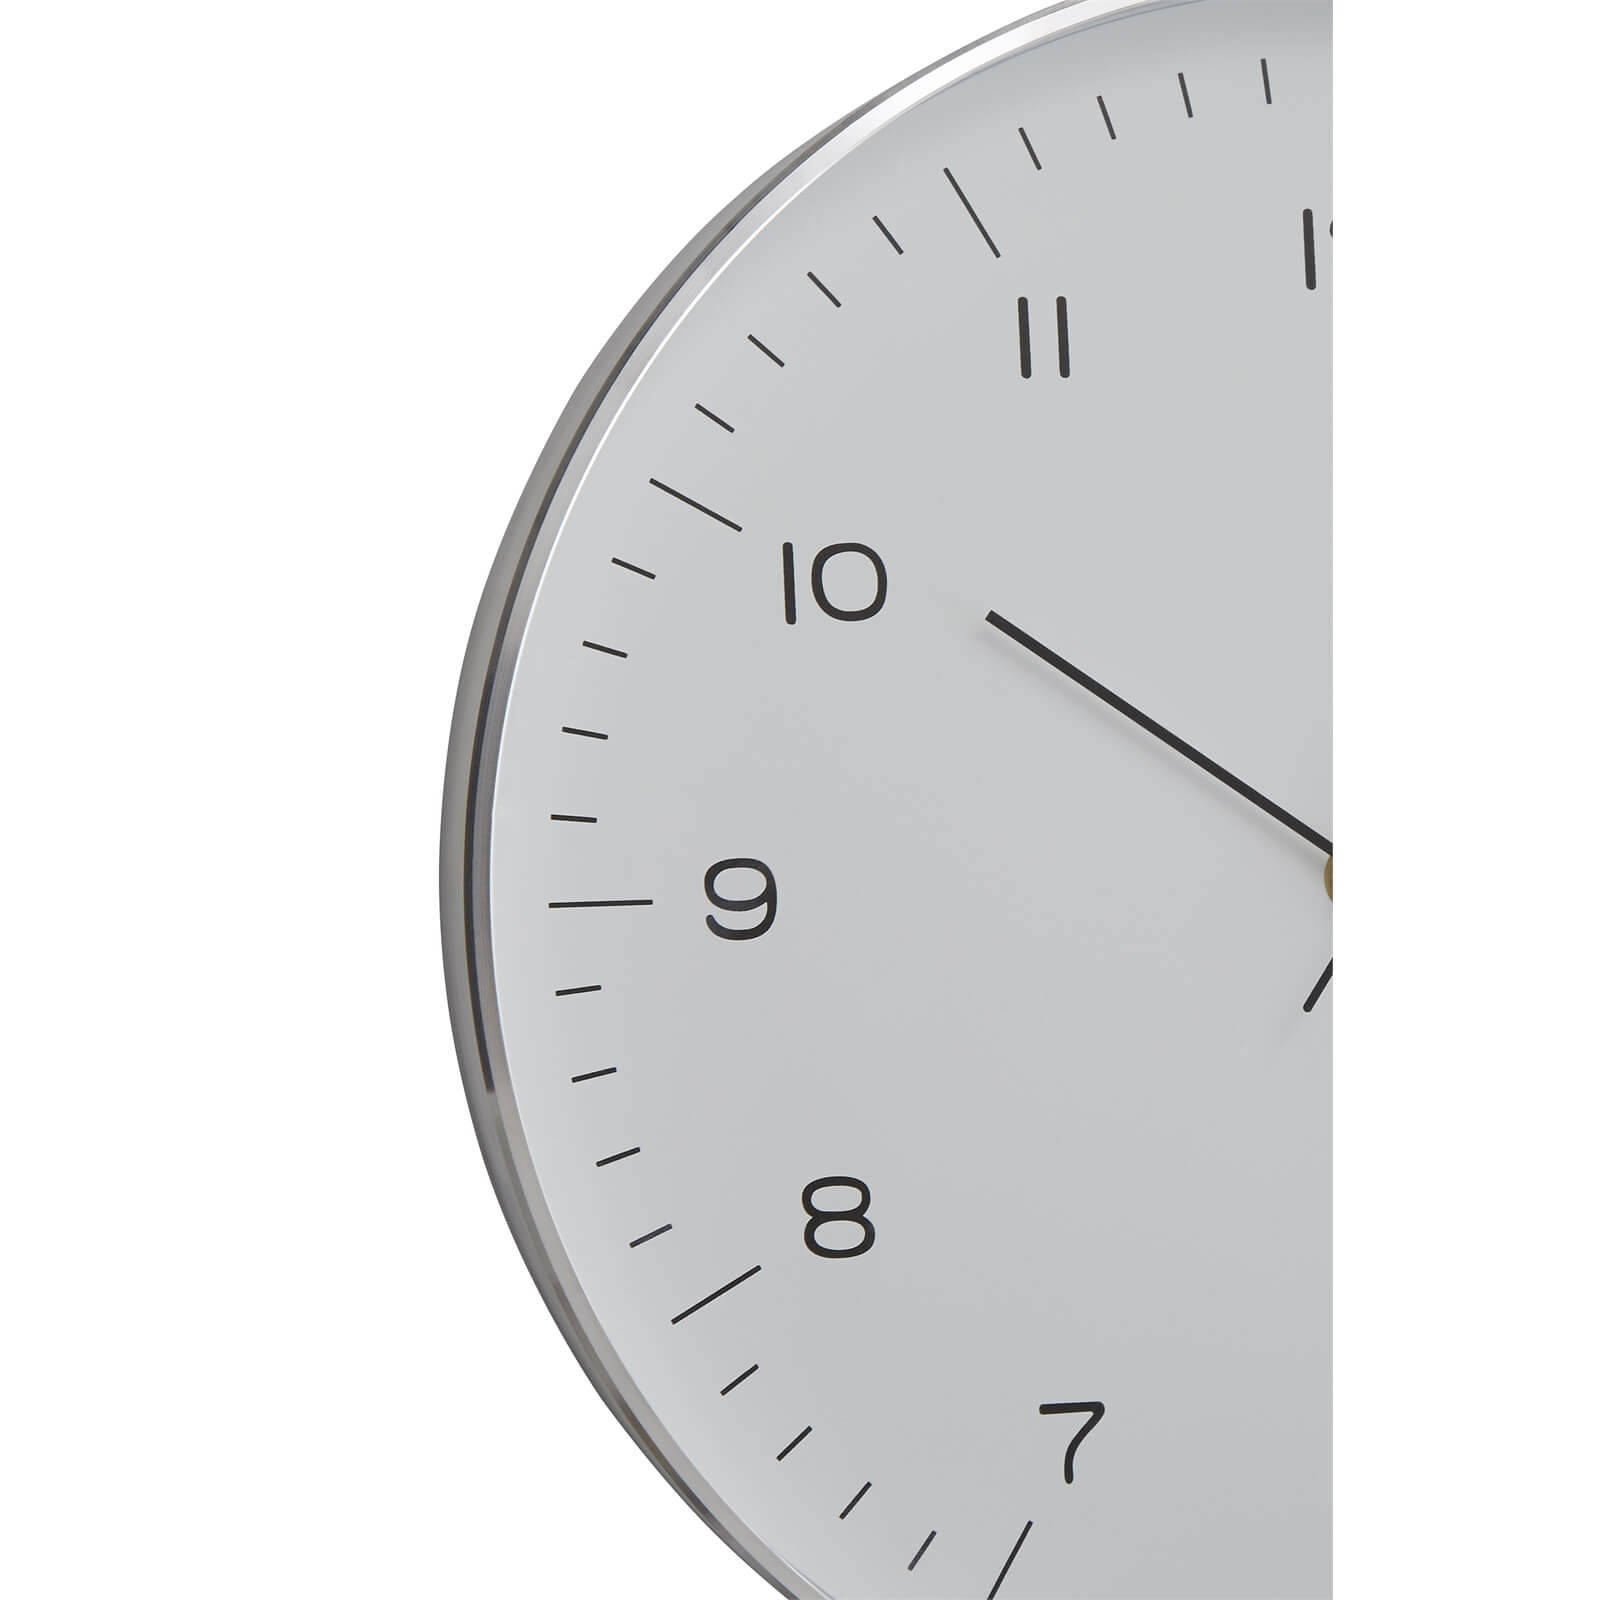 Elko Wall Clock - Silver